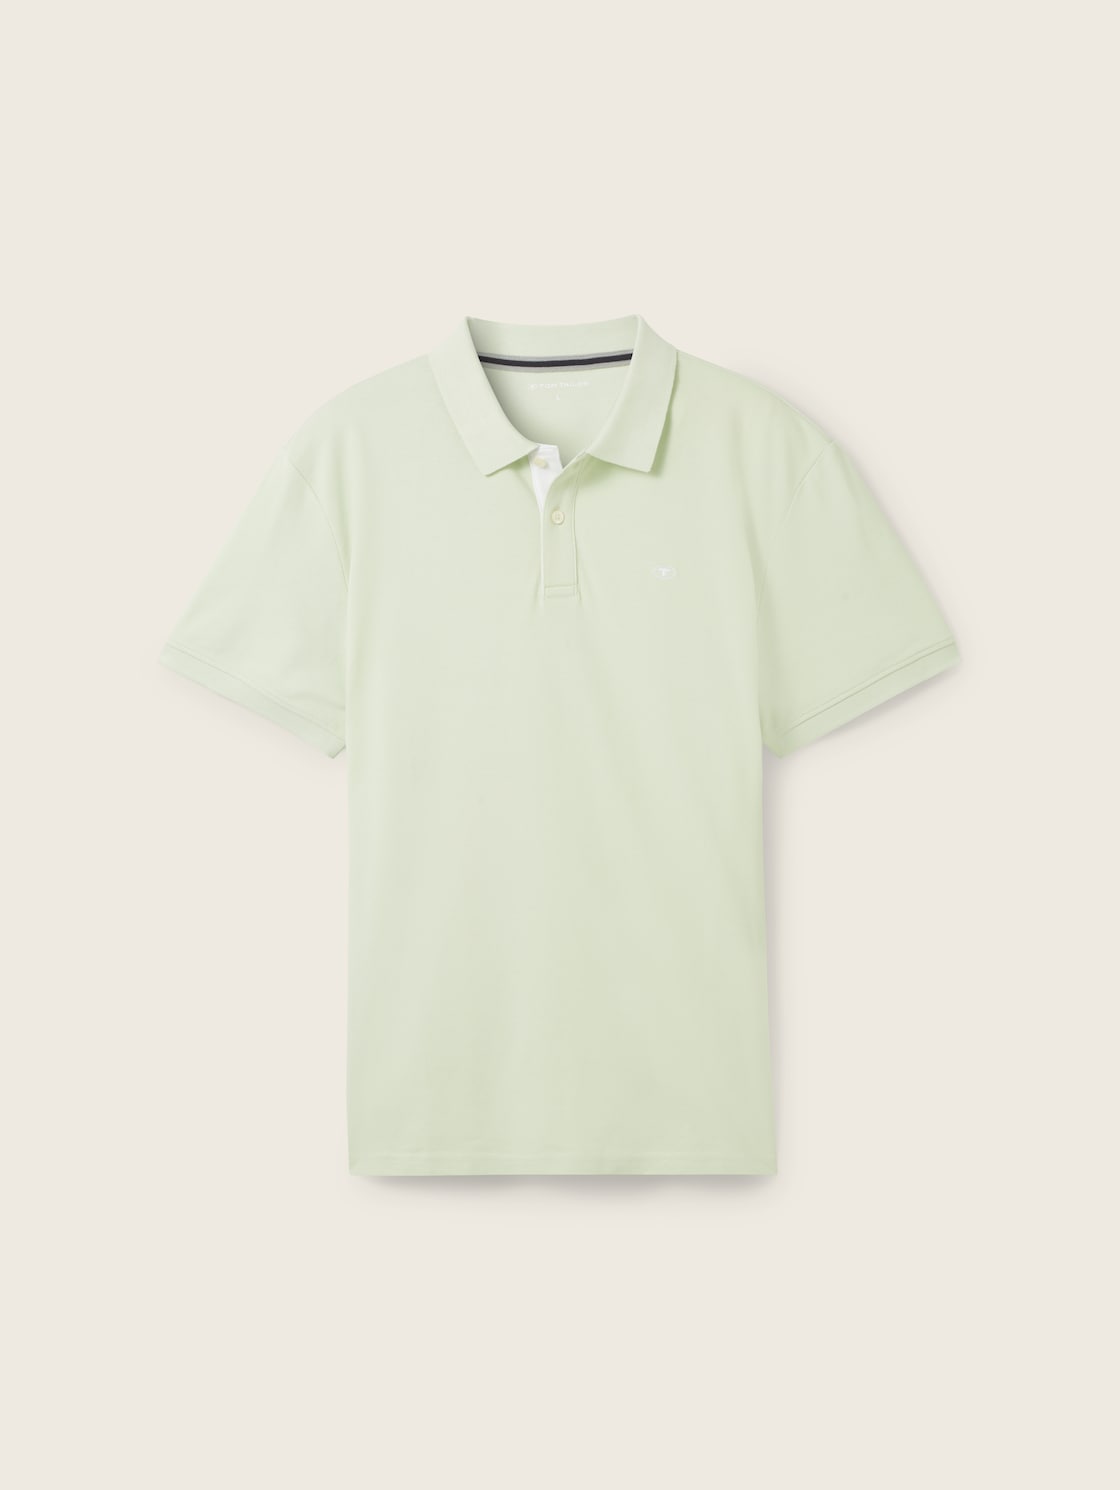 TOM TAILOR Herren Basic Polo Shirt, grün, Uni, Gr. S von Tom Tailor